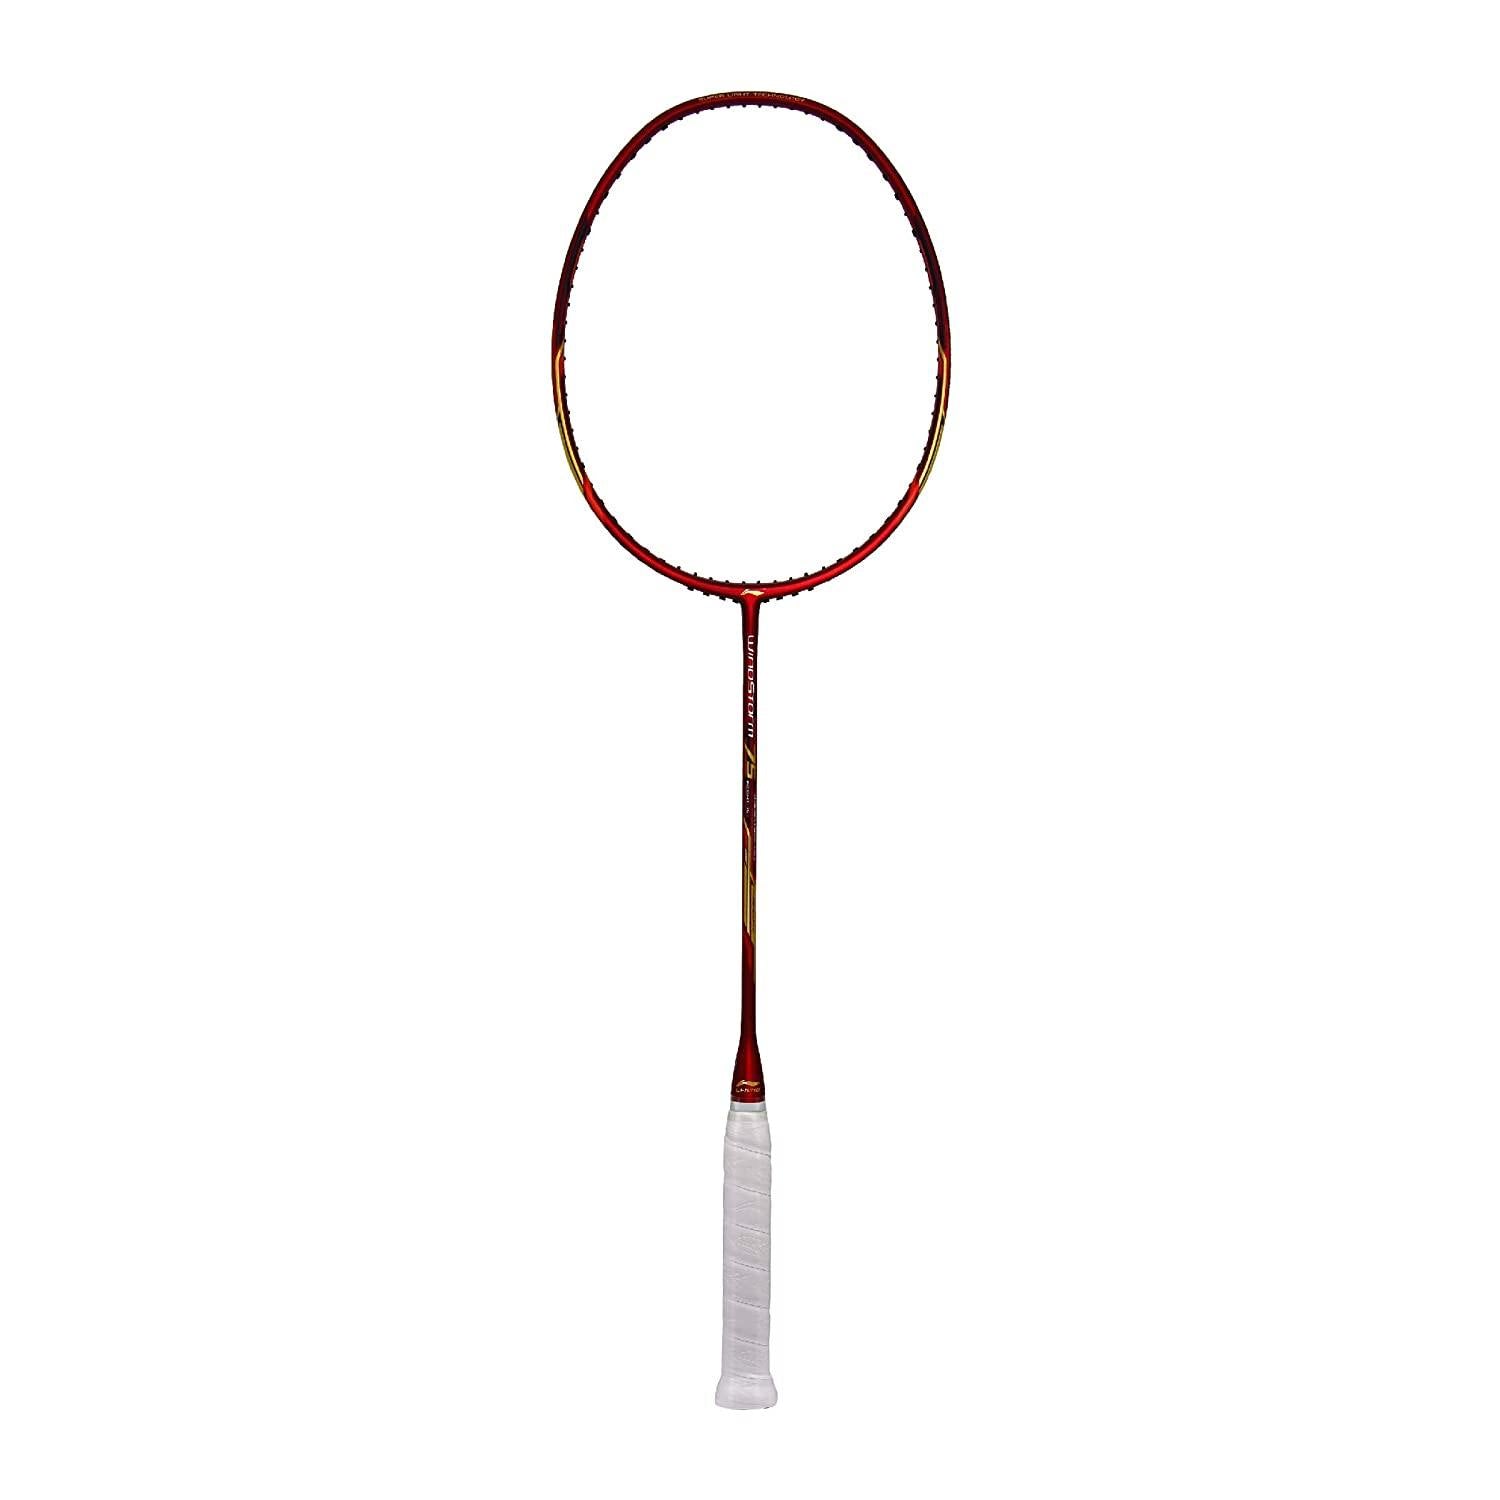 Li-Ning Windstorm 75 Carbon-Fiber Badminton Racquet Unstrung Red/Gold - Best Price online Prokicksports.com